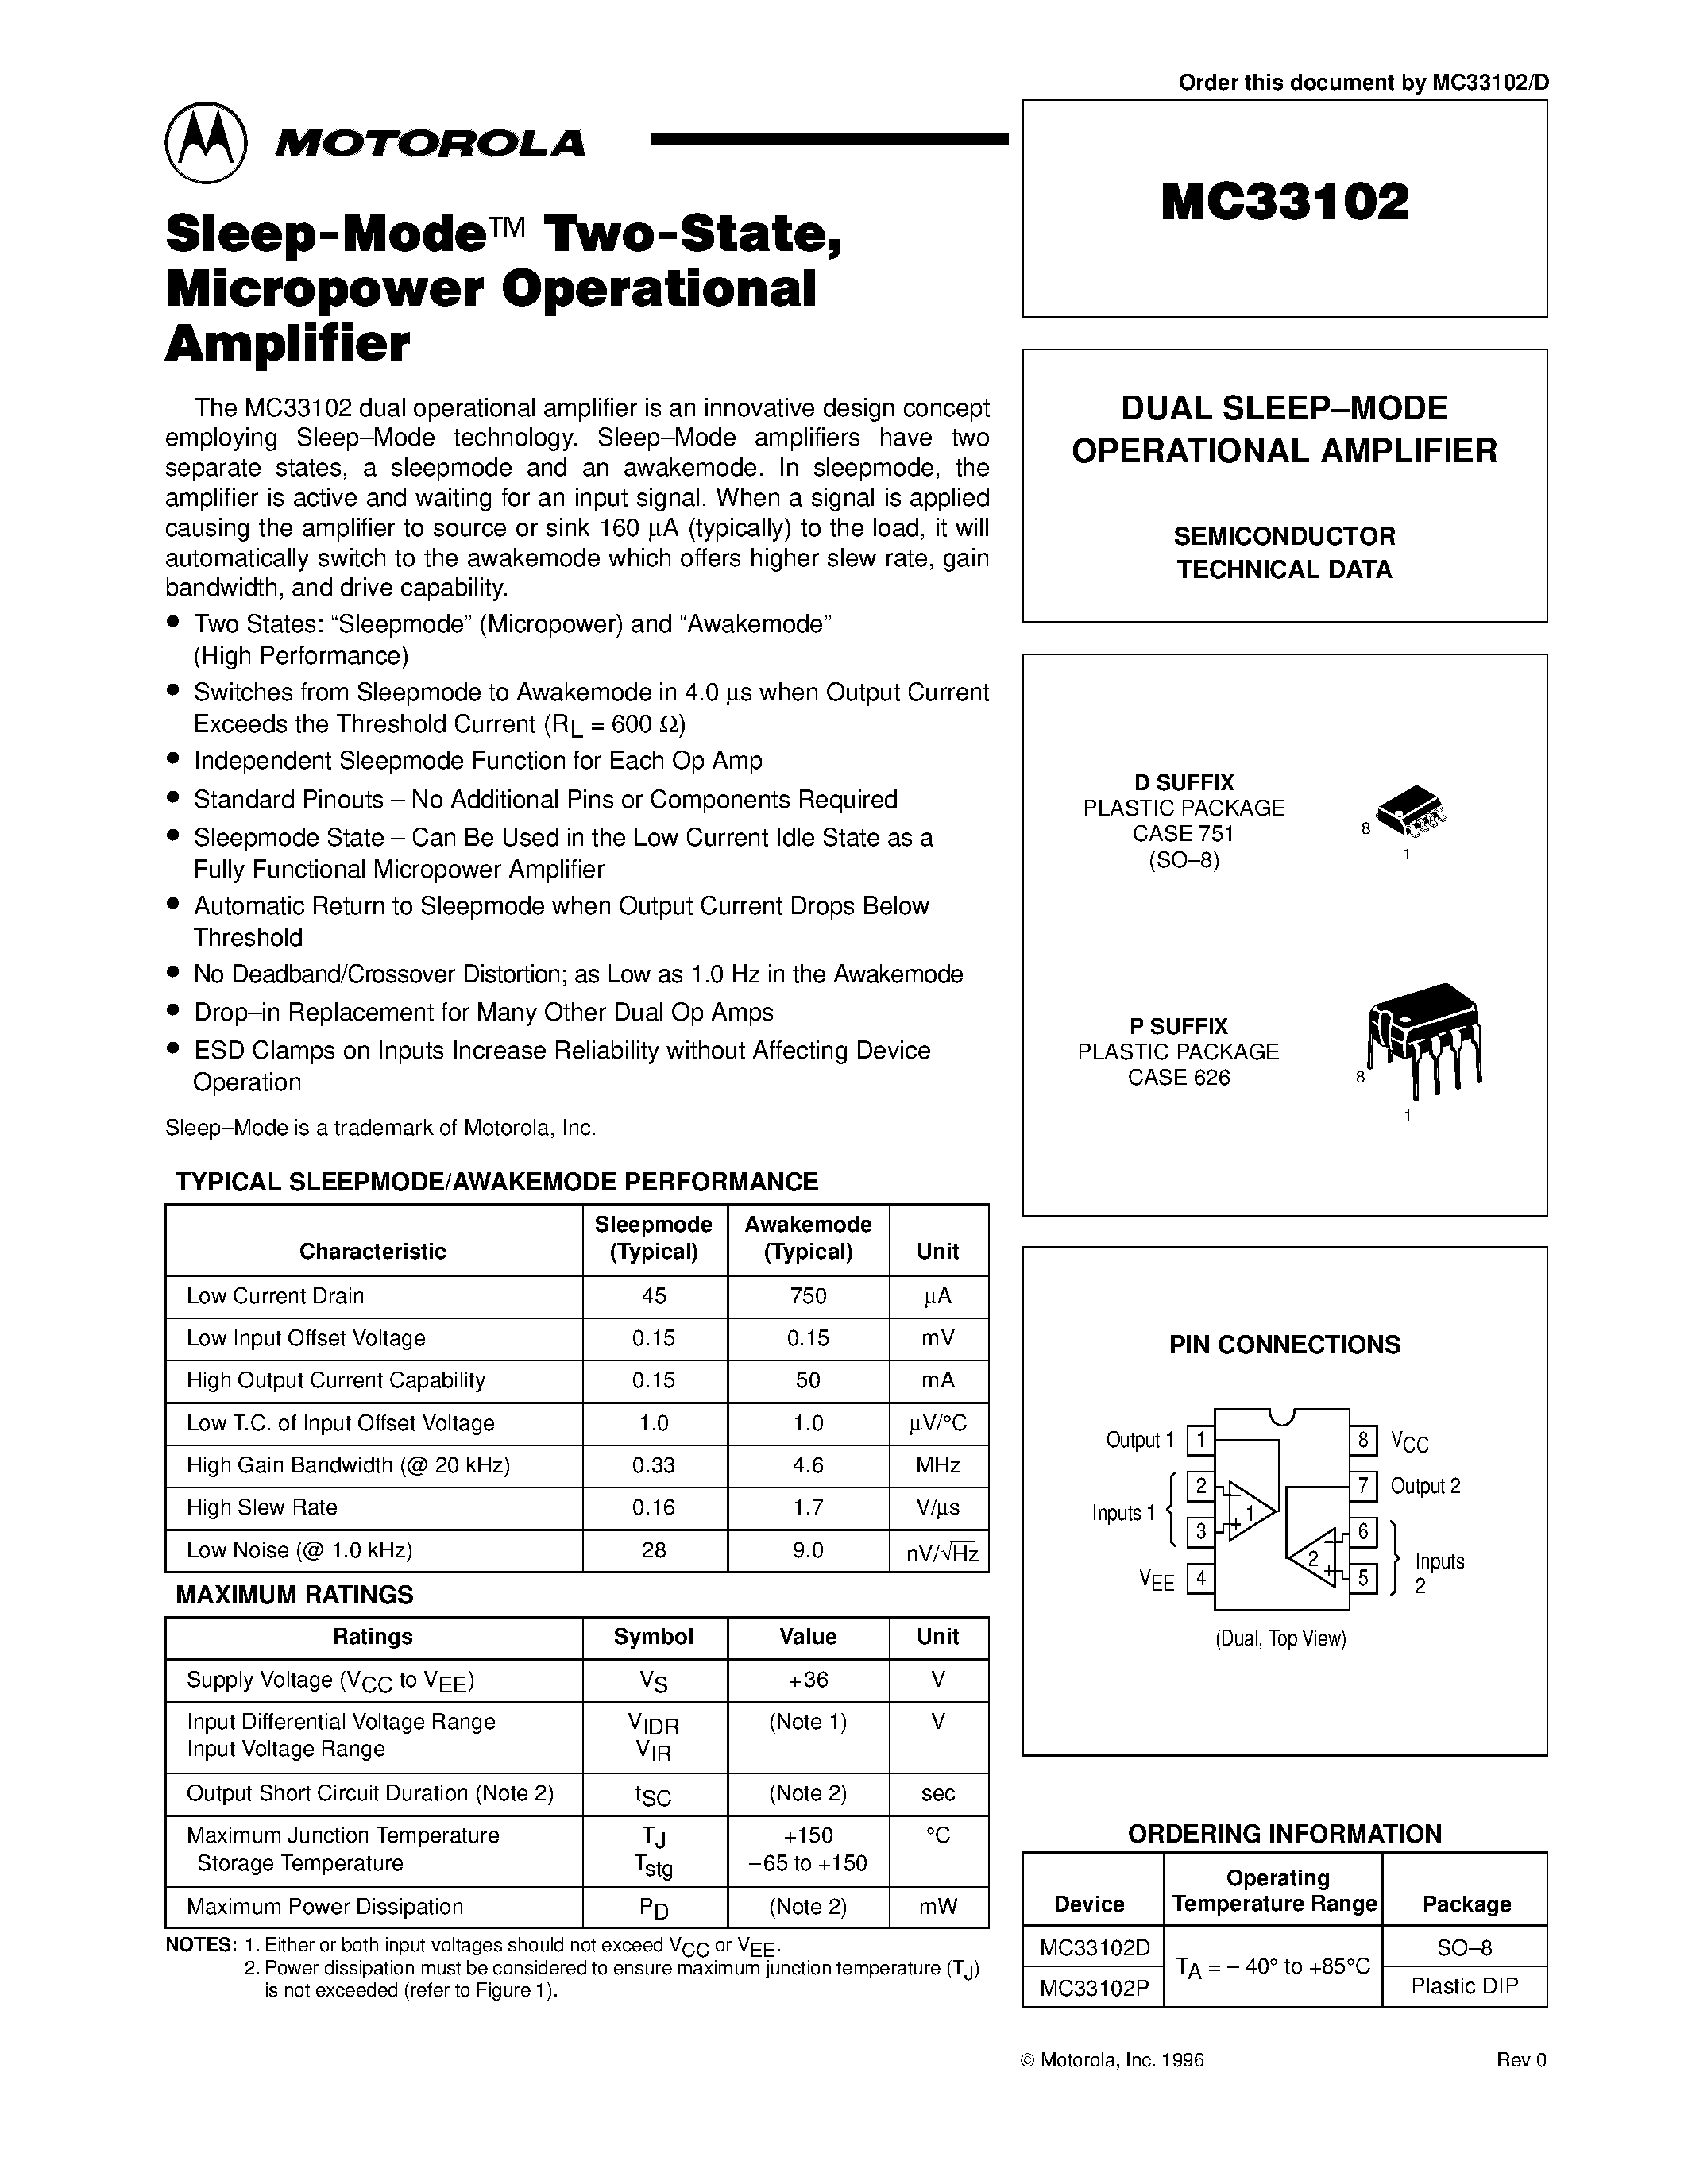 Datasheet MC33102 - DUAL SLEEP-MODE OPERATIONAL AMPLIFIER page 1